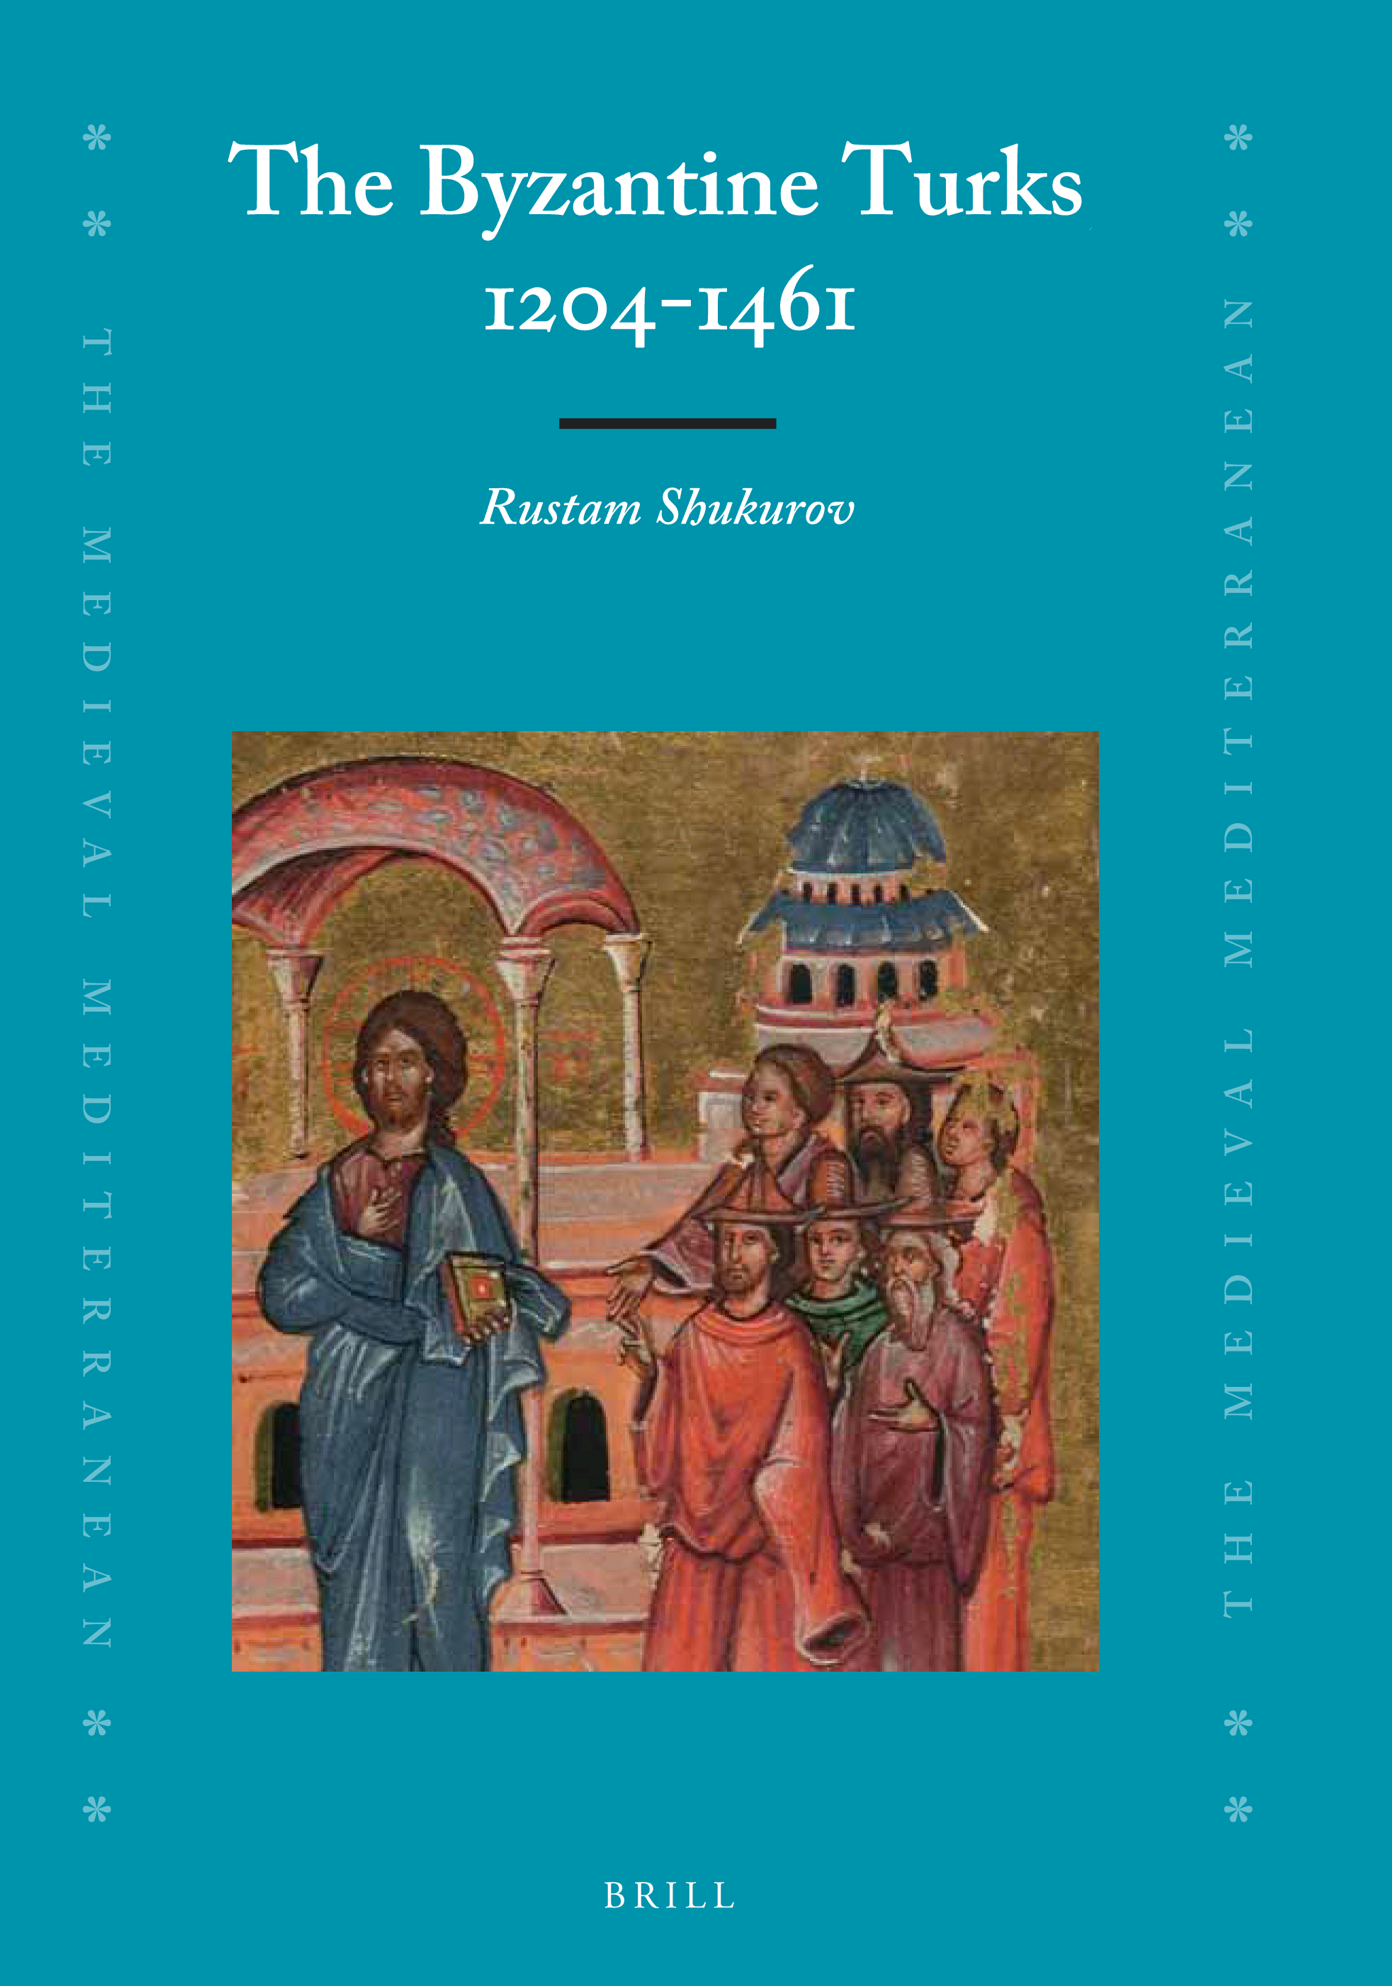 Shukurov R. The Byzantine Turks, 1204-1461. - Leiden, Brill Academic Publishers, 2016. - 528 p.